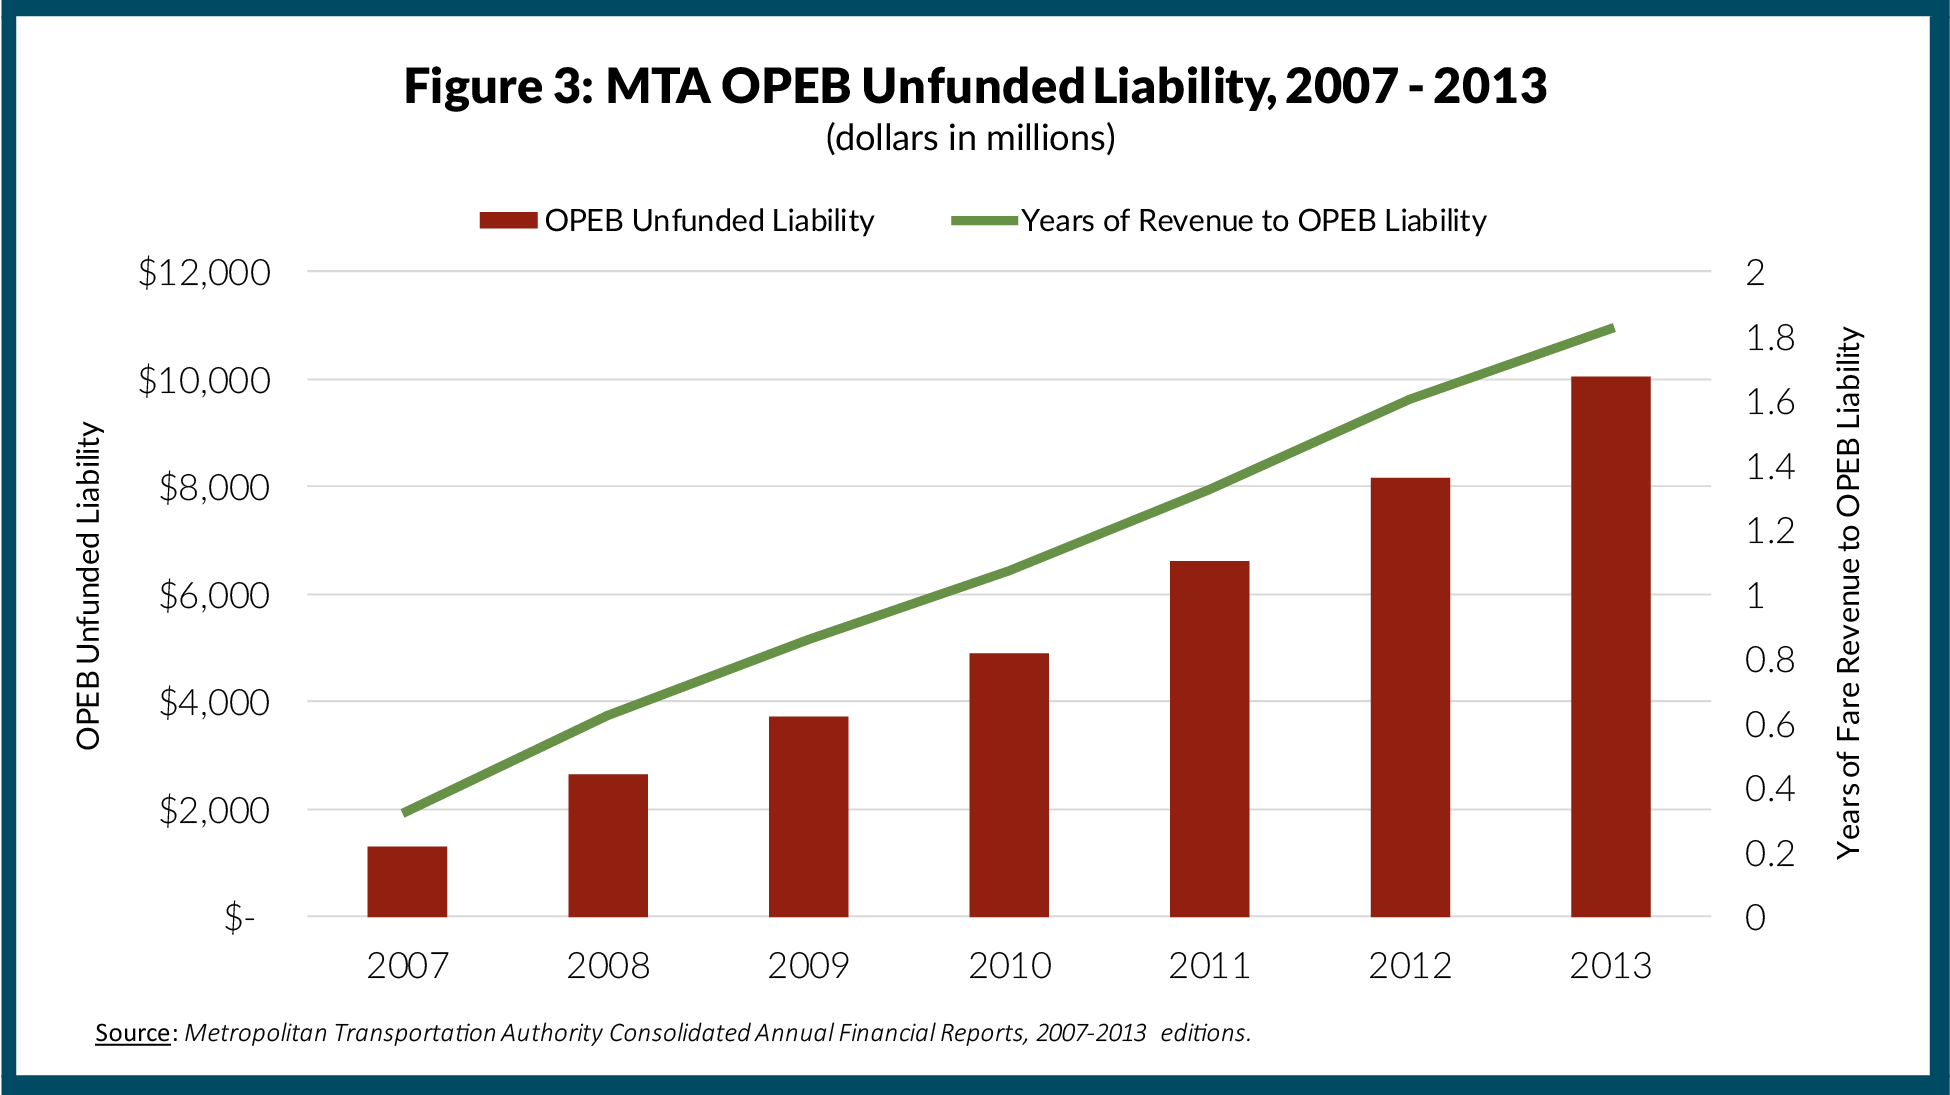 MTA OPEB Unfunded Liability, 2007-2013